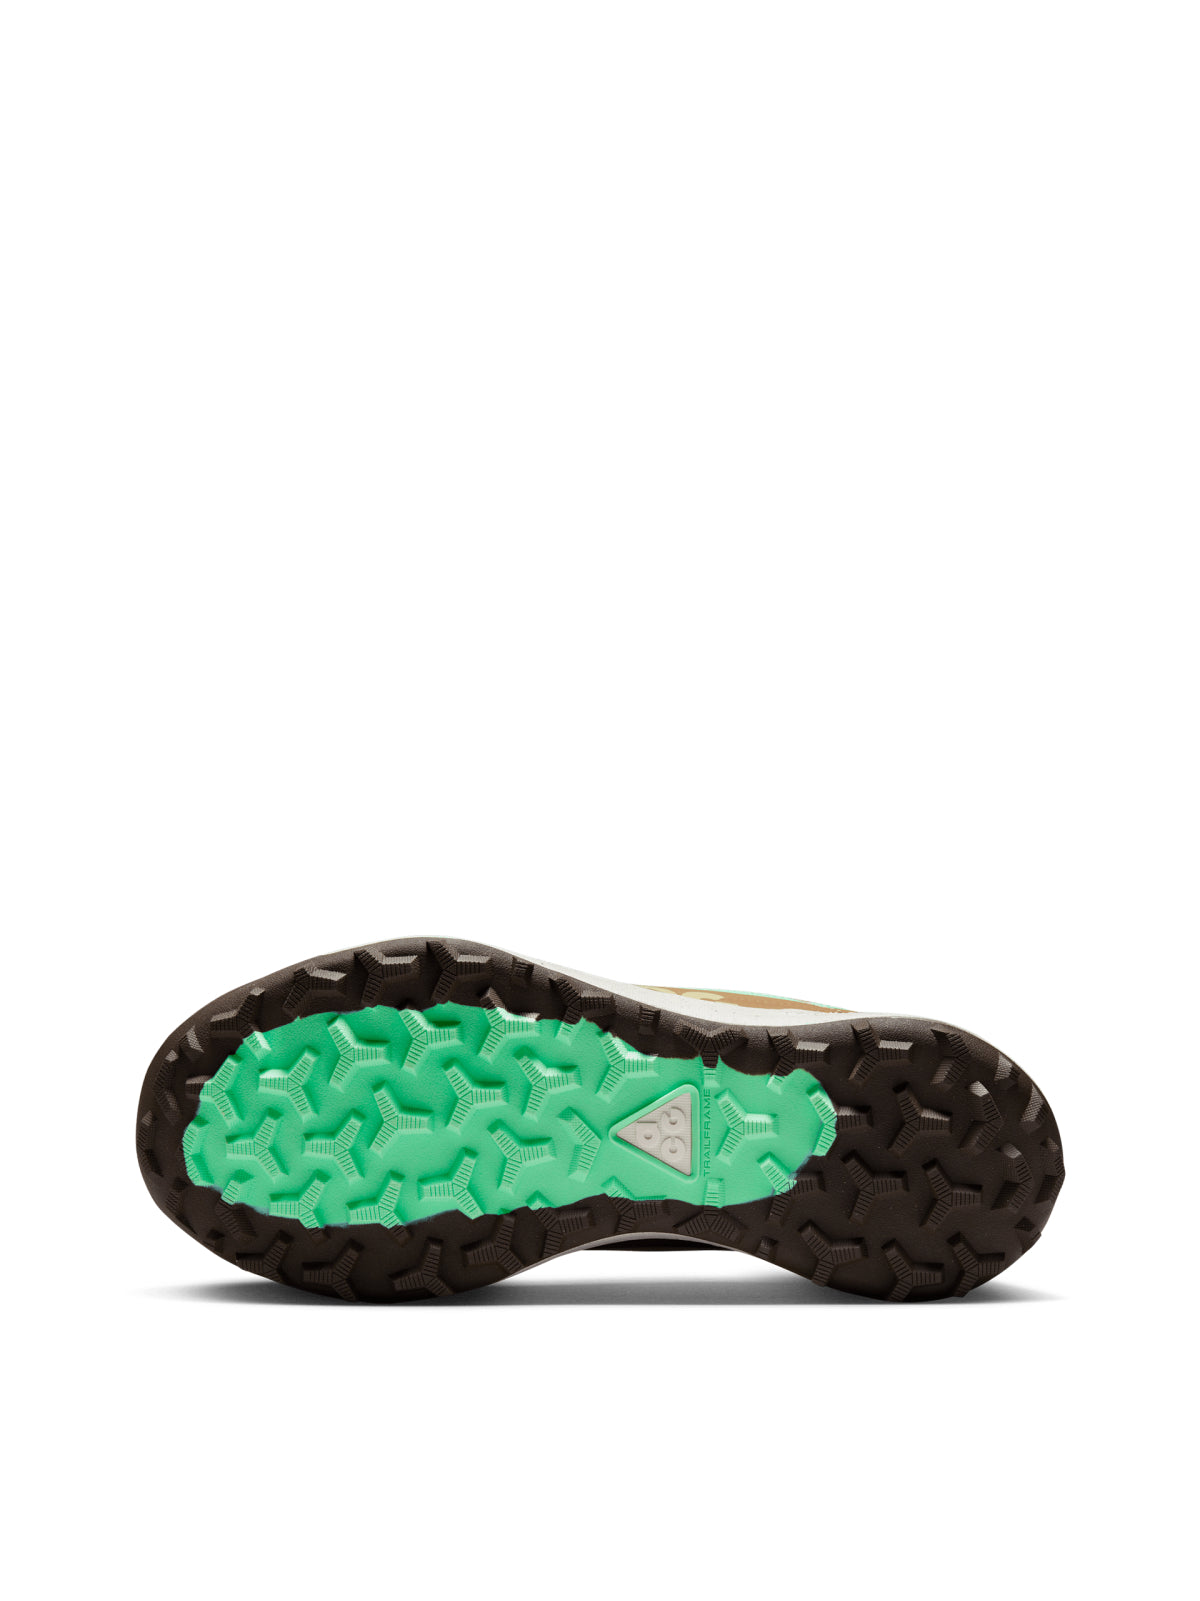 Nike-OUTLET-SALE-ACG Lowcate Limestone Sneakers-ARCHIVIST